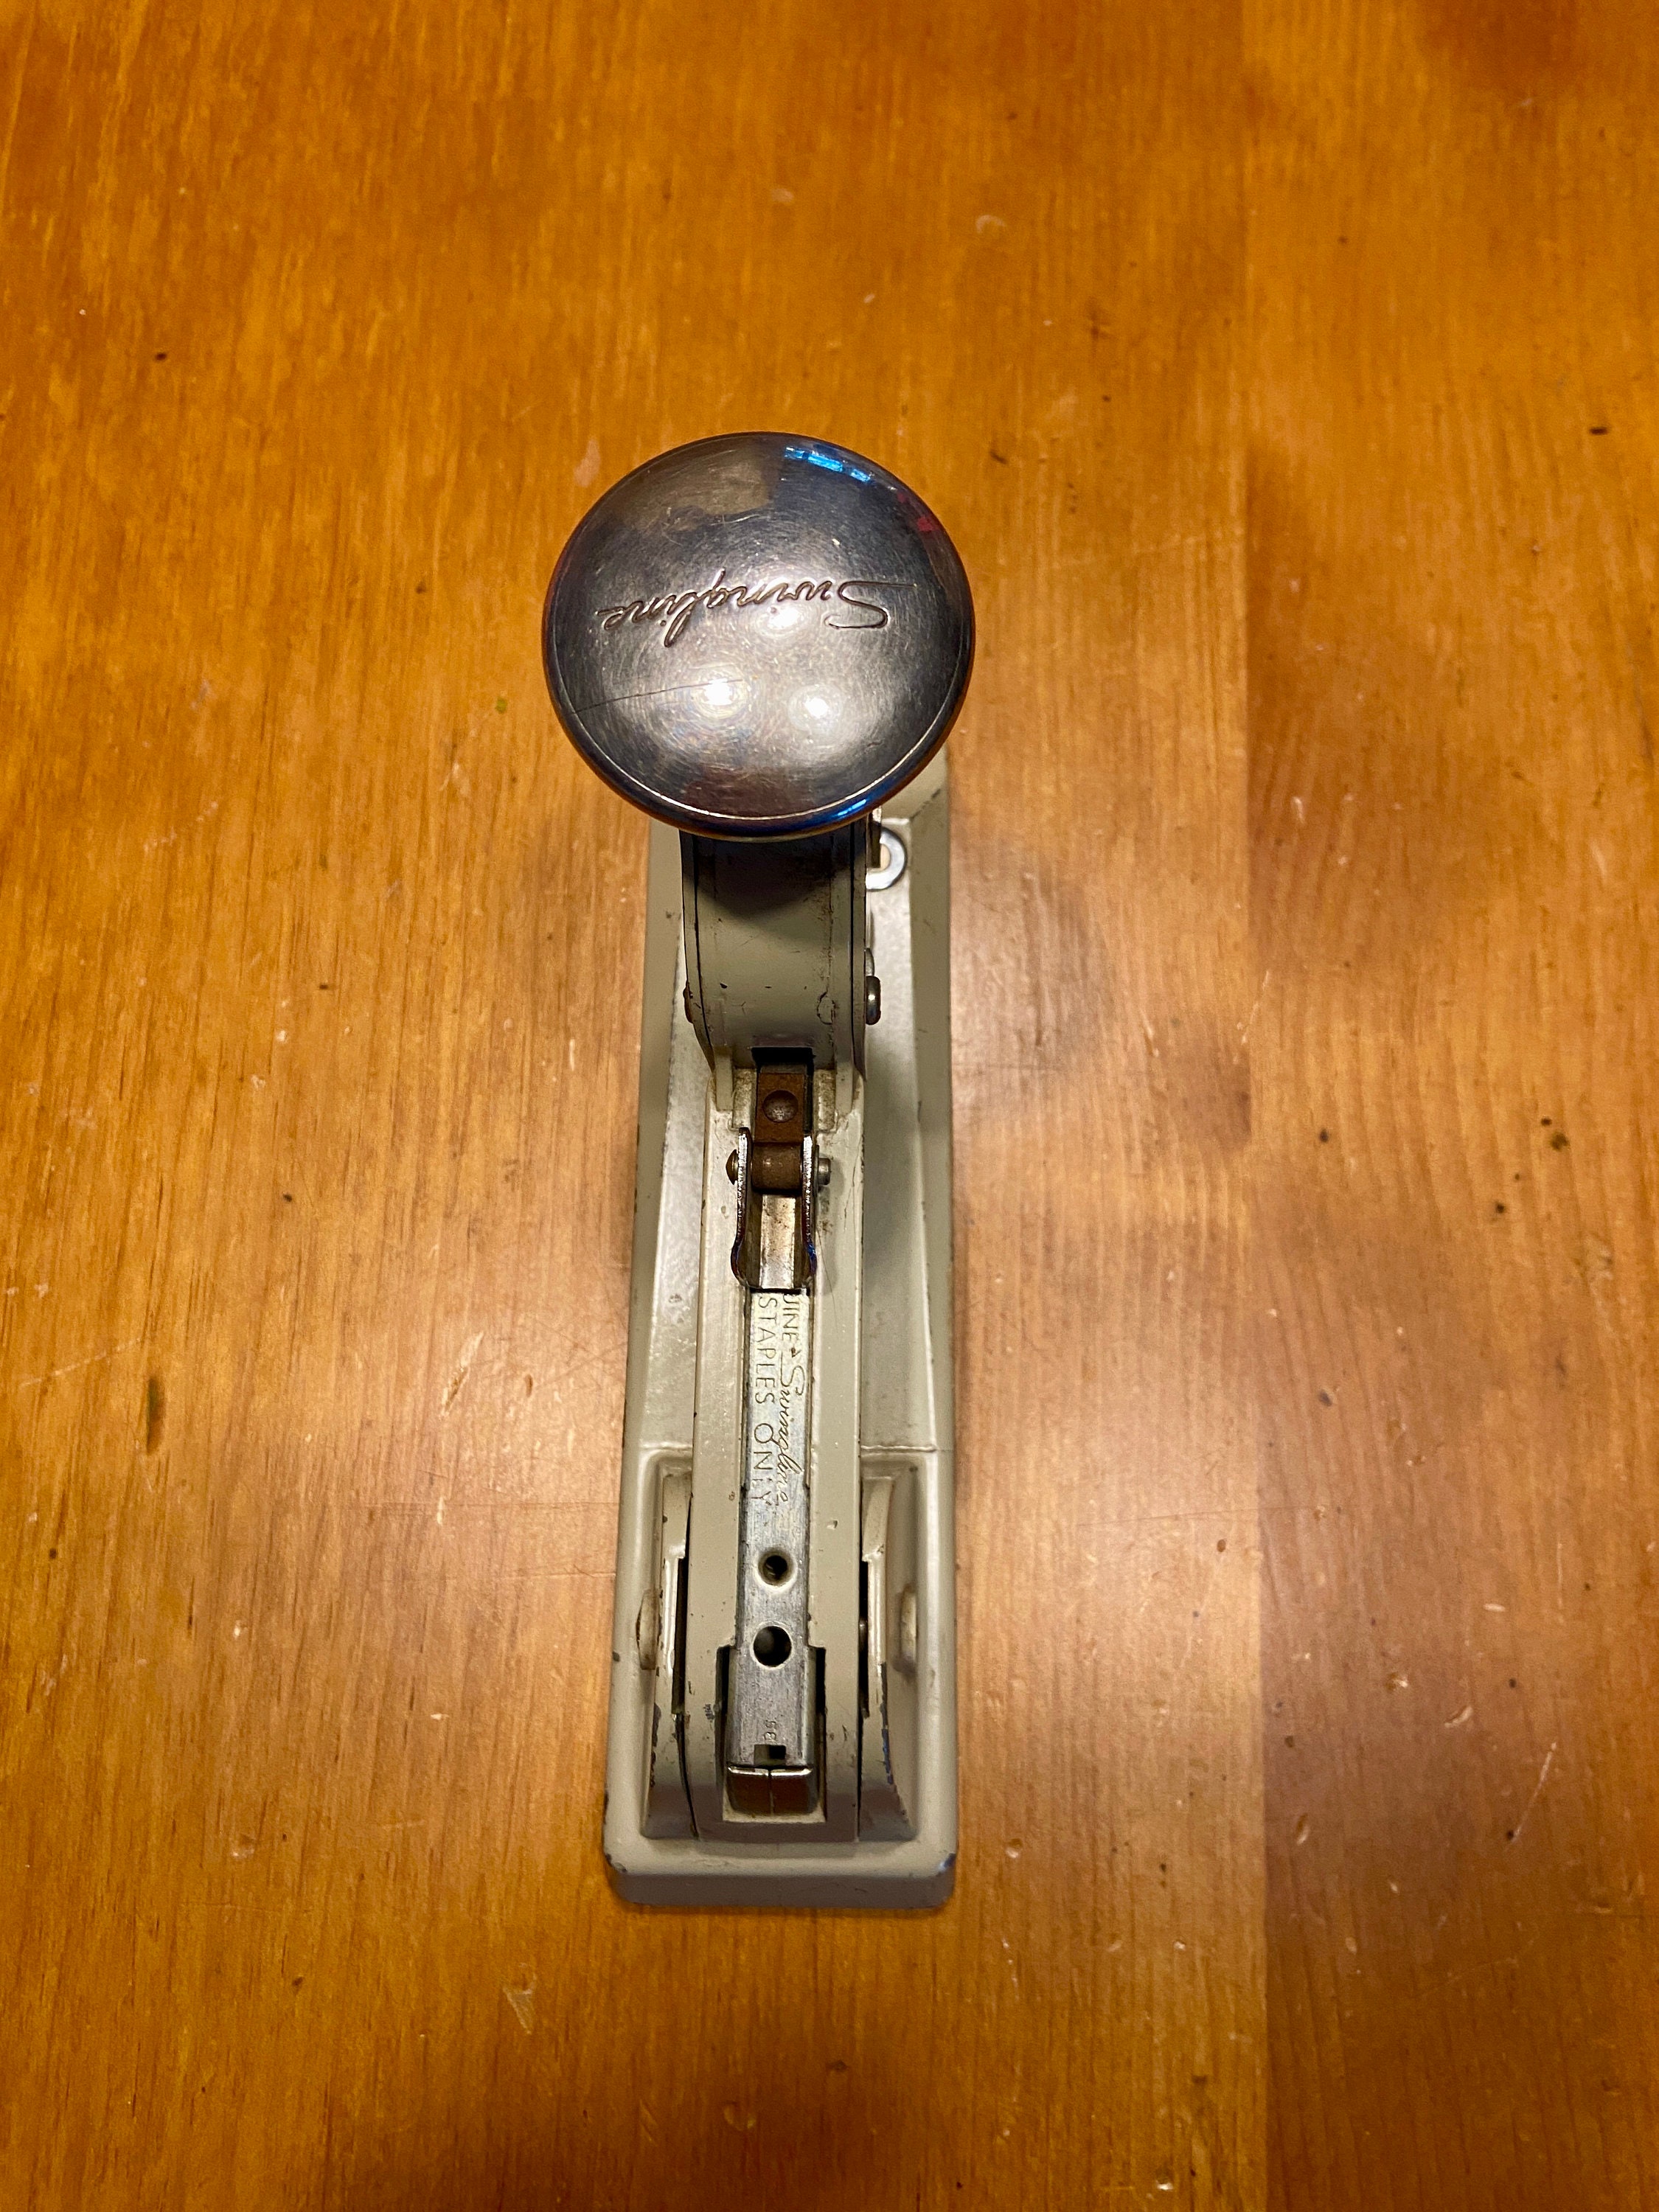 swingline 113 stapler heavy duty - general for sale - by owner - craigslist